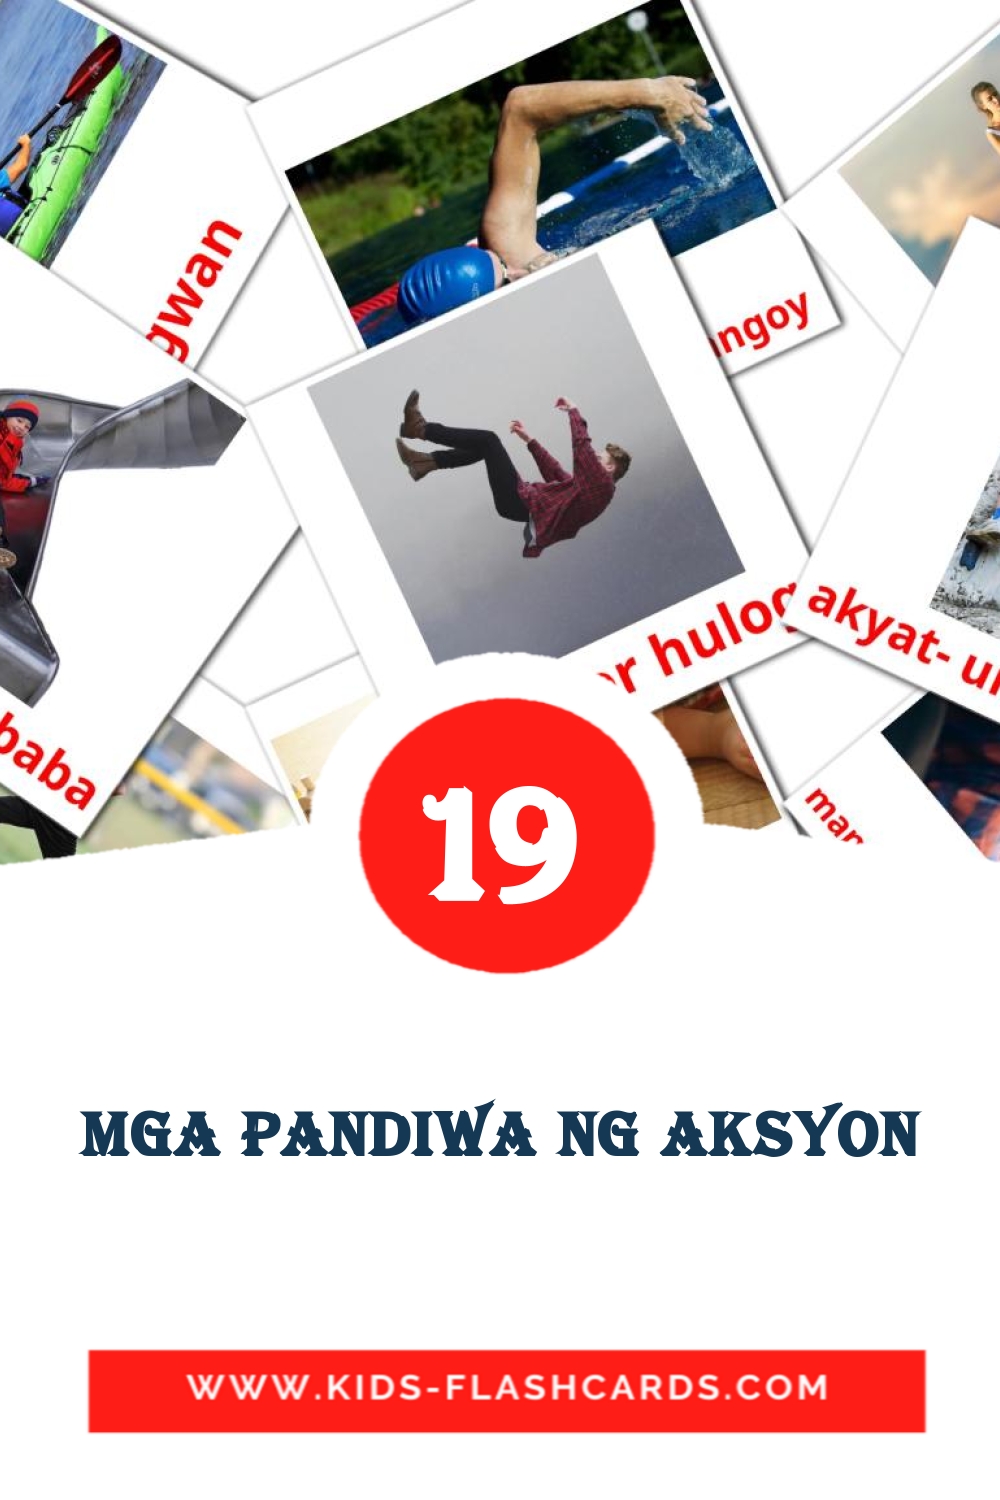 19 Mga pandiwa ng aksyon fotokaarten voor kleuters in het filipino